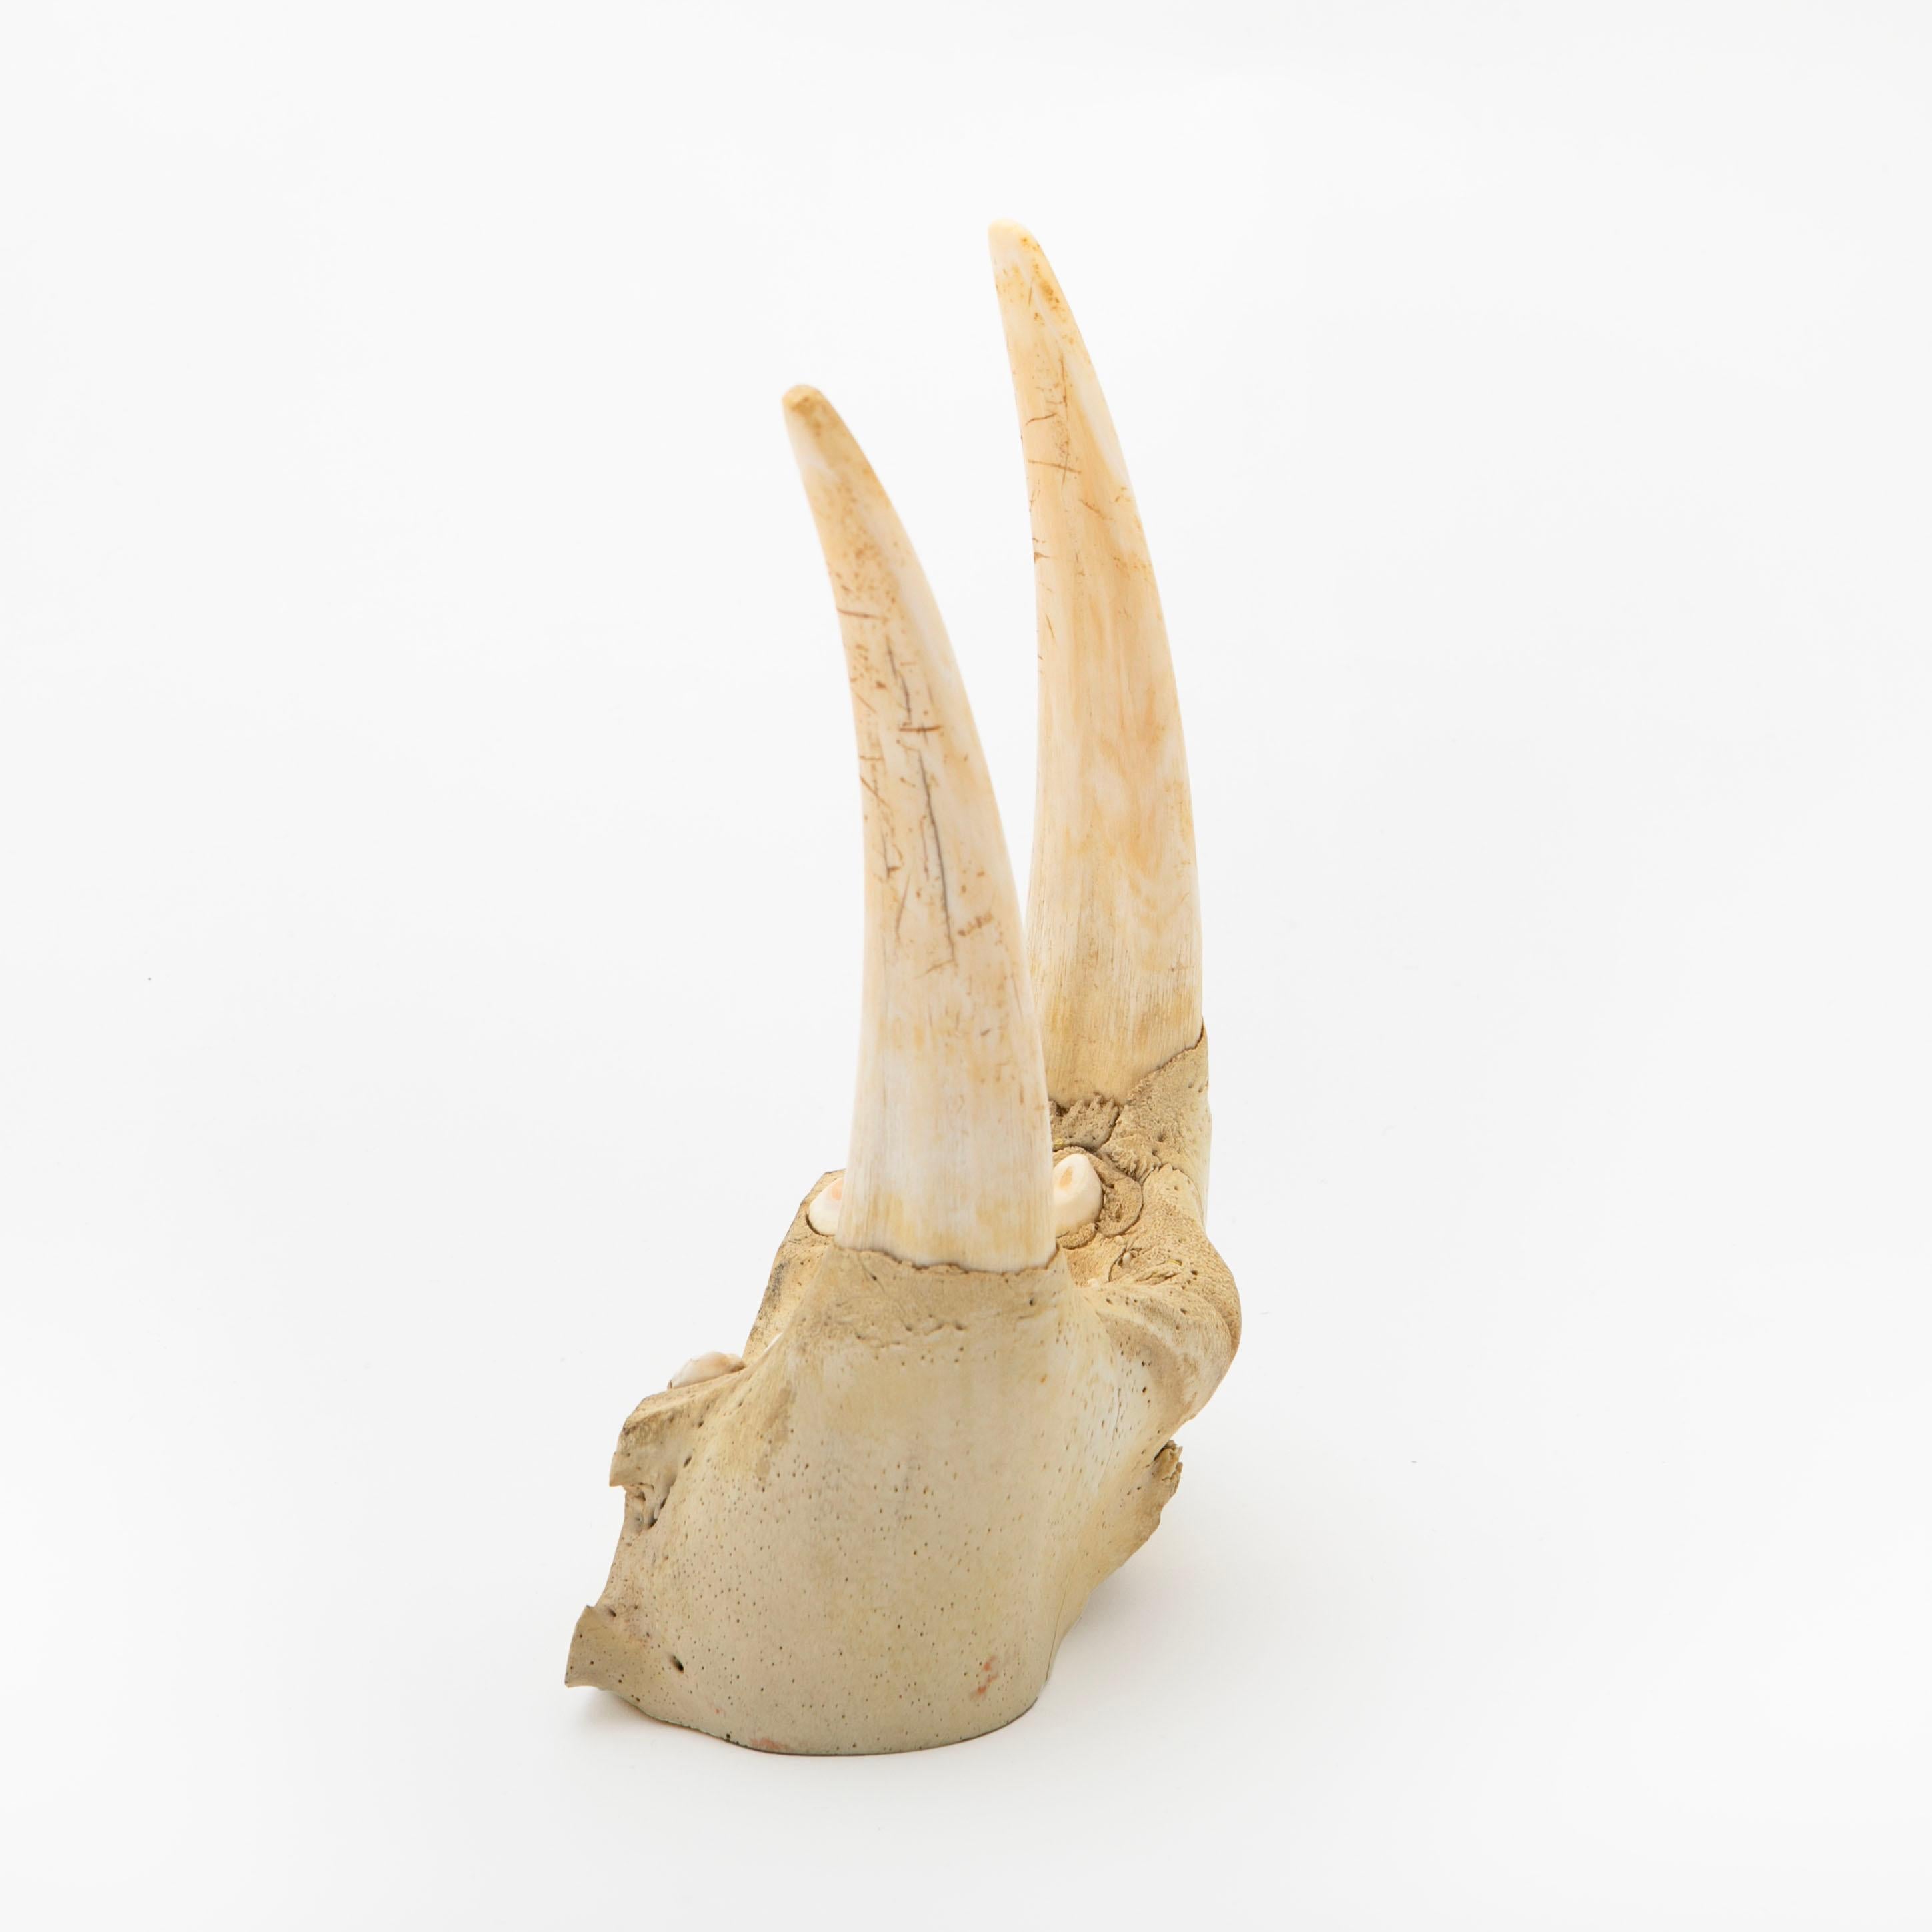 Greenlandica Walrus upper jaw, Odobenus rosmarus, with molars and 2 tusks. 

Tusk length: 18 cm.

Greenland approx. 1900